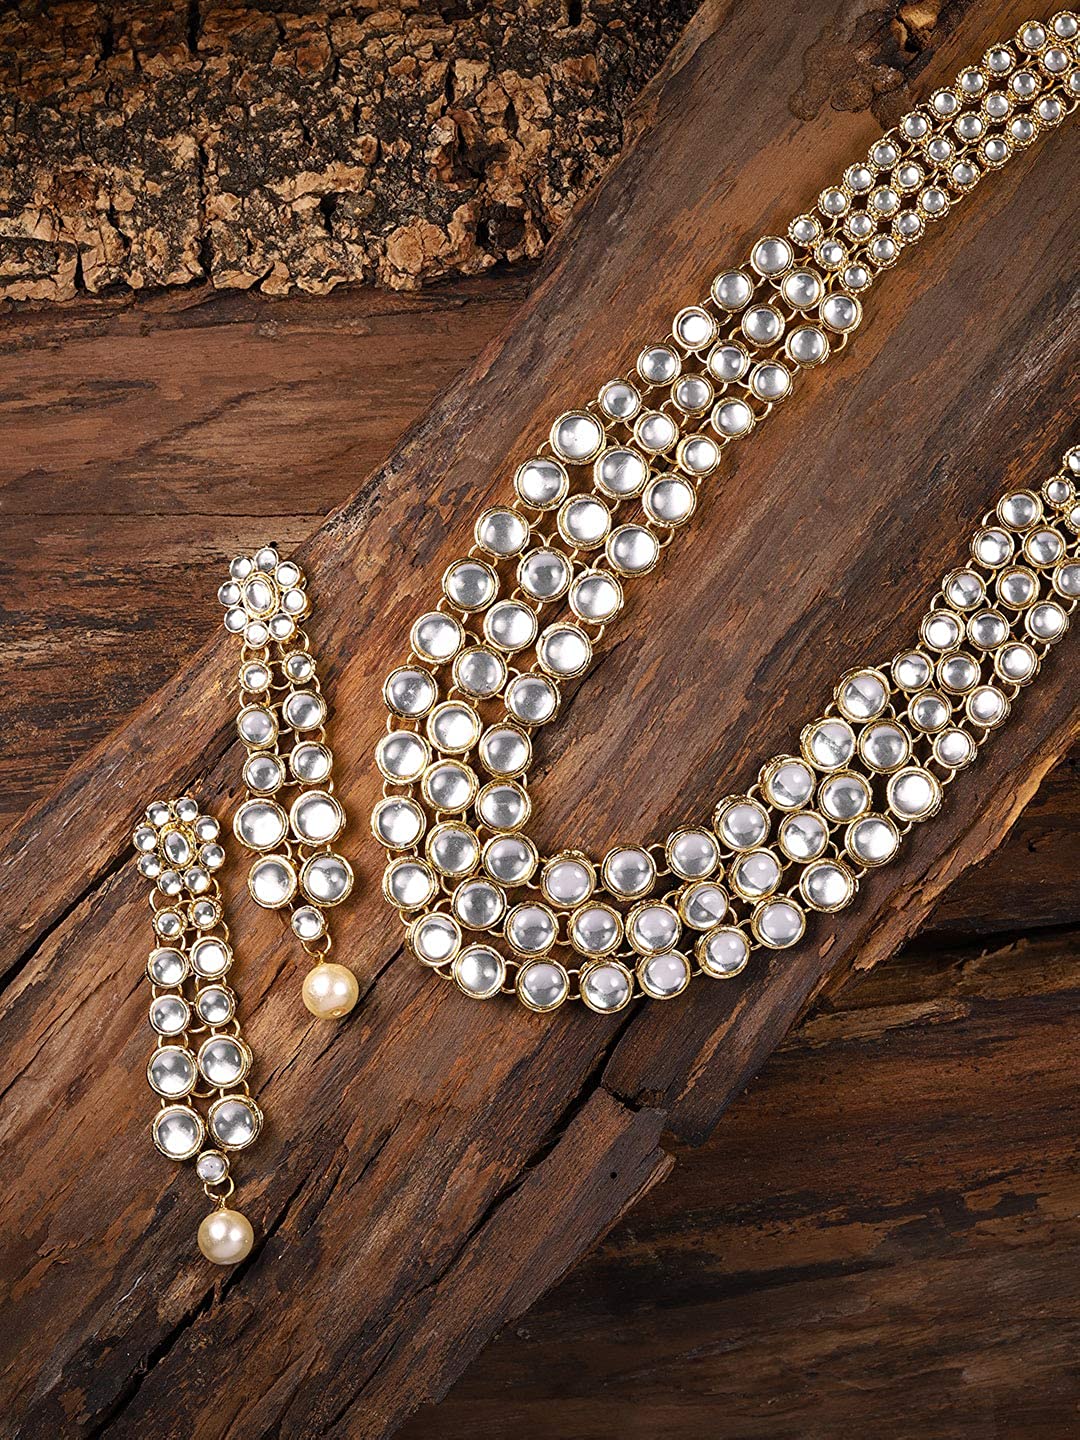 Women's gold plated anushkasharma inspired faux three layered kundan jewelleryset for womenij301w - I Jewels